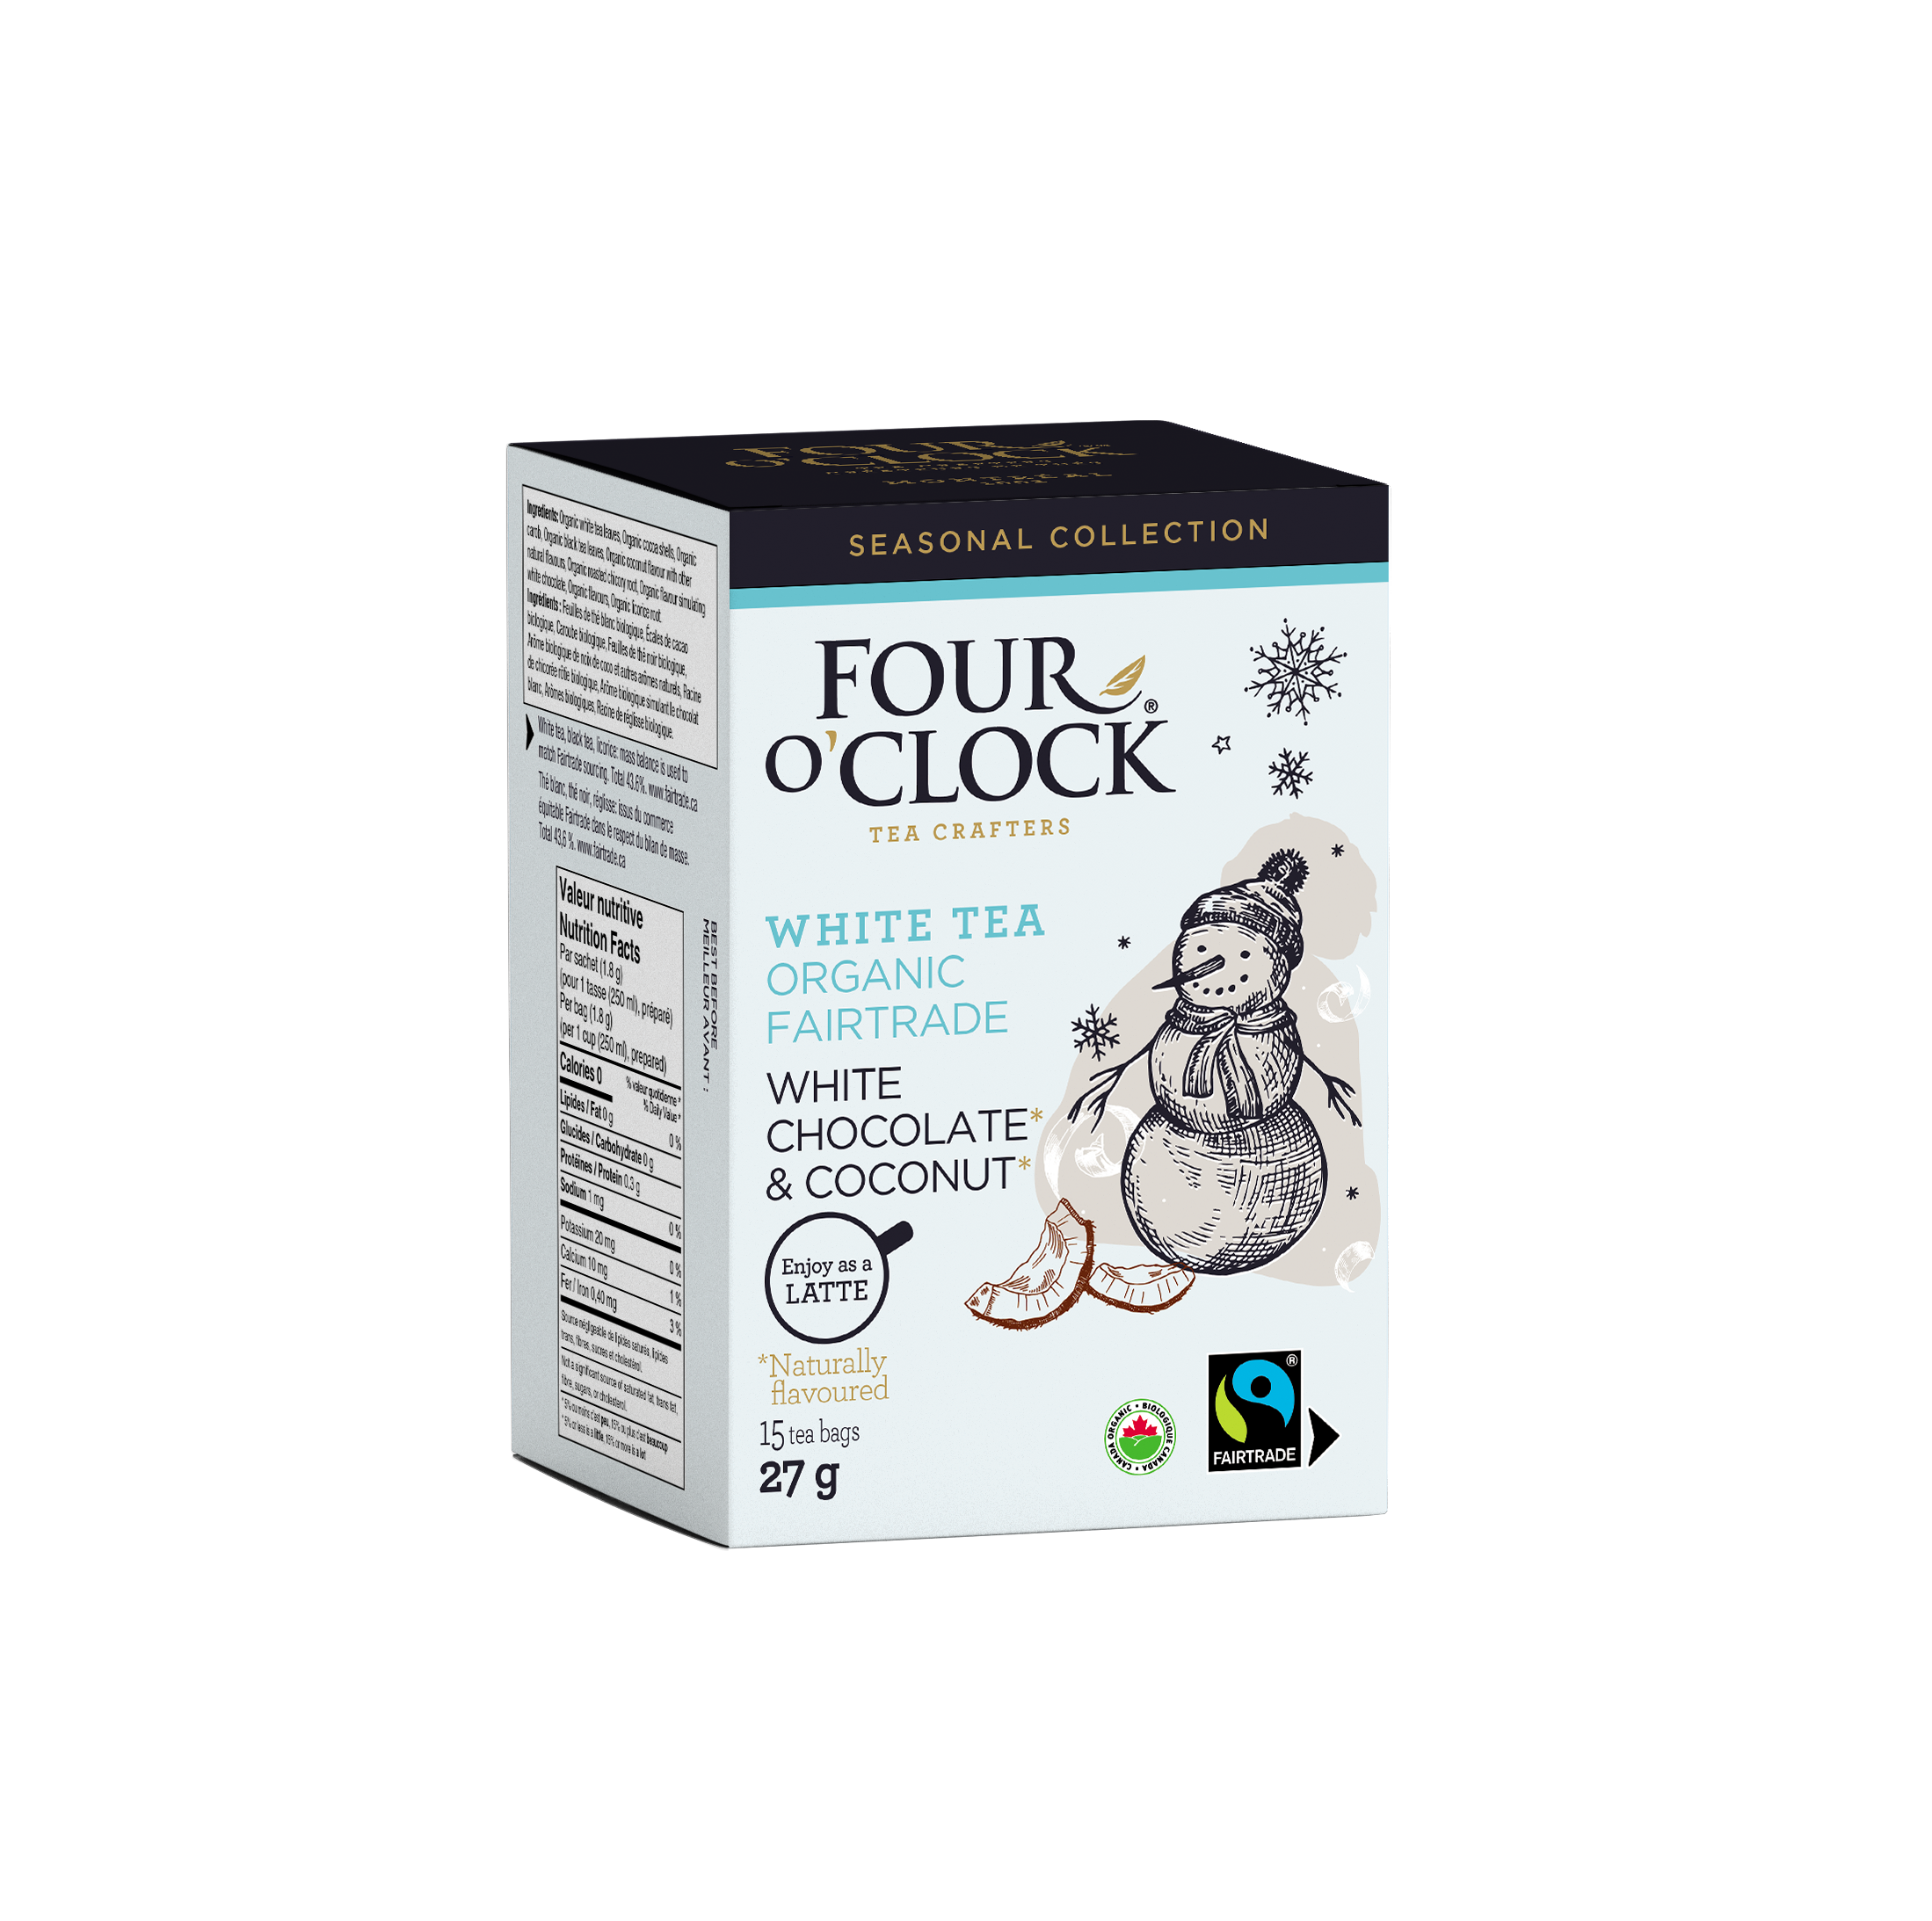 White Chocolate & Coconut Organic Fairtrade White Tea